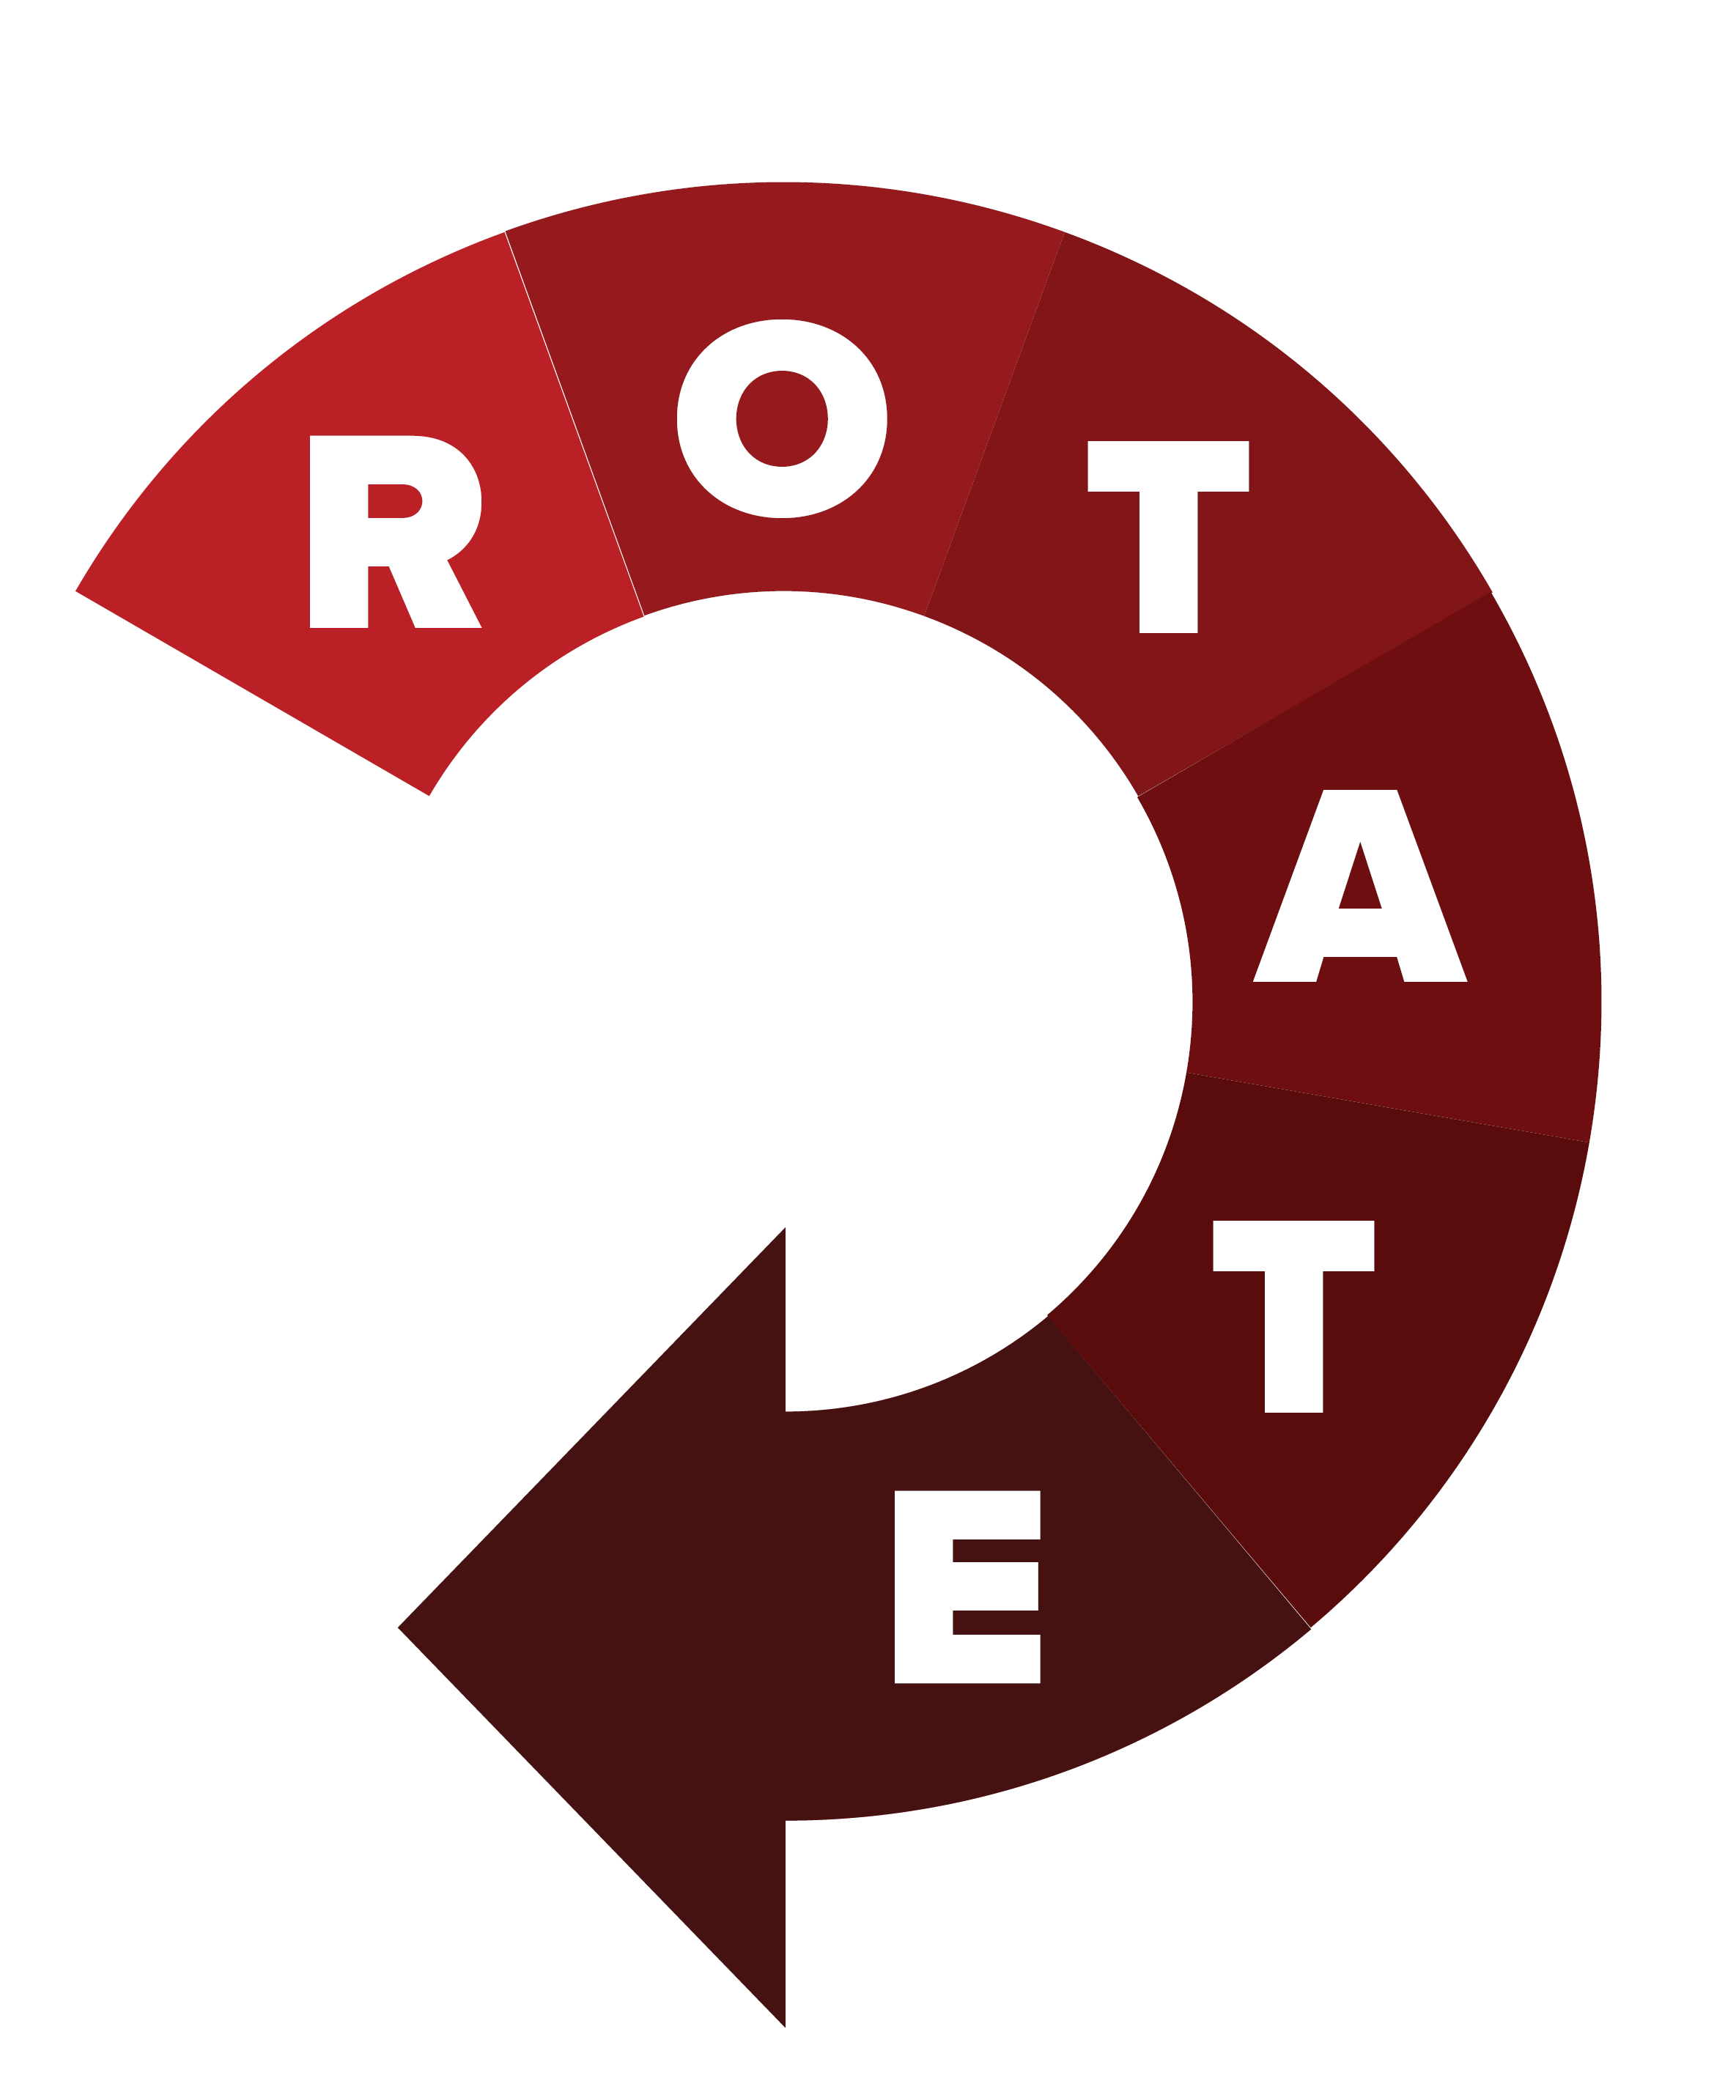 ROTATE in a circular arrow